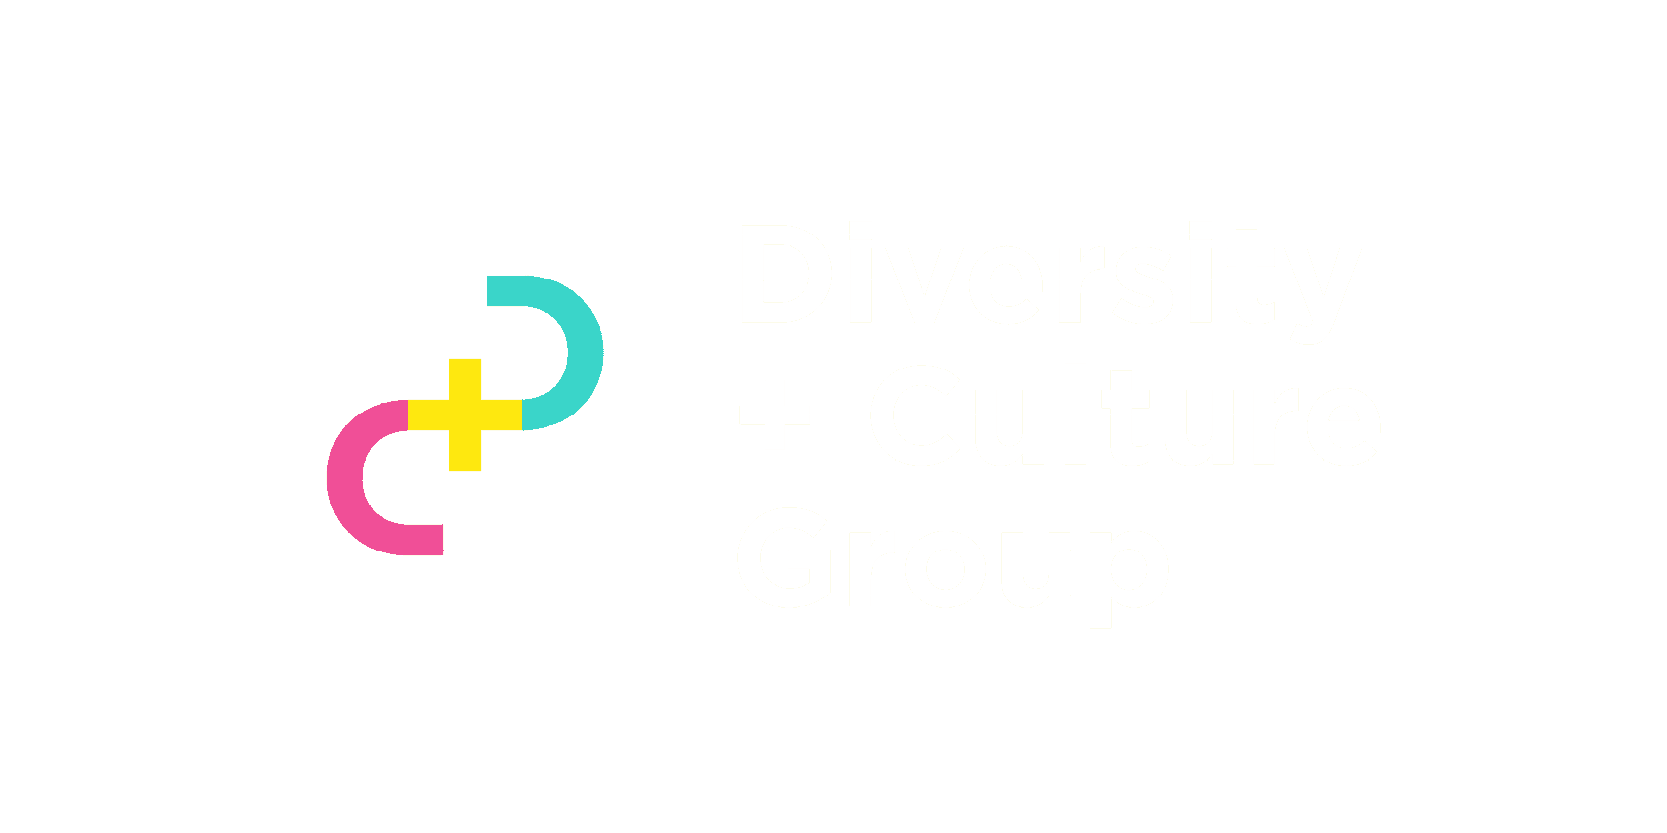 Diversity + Culture Group symbol logo design